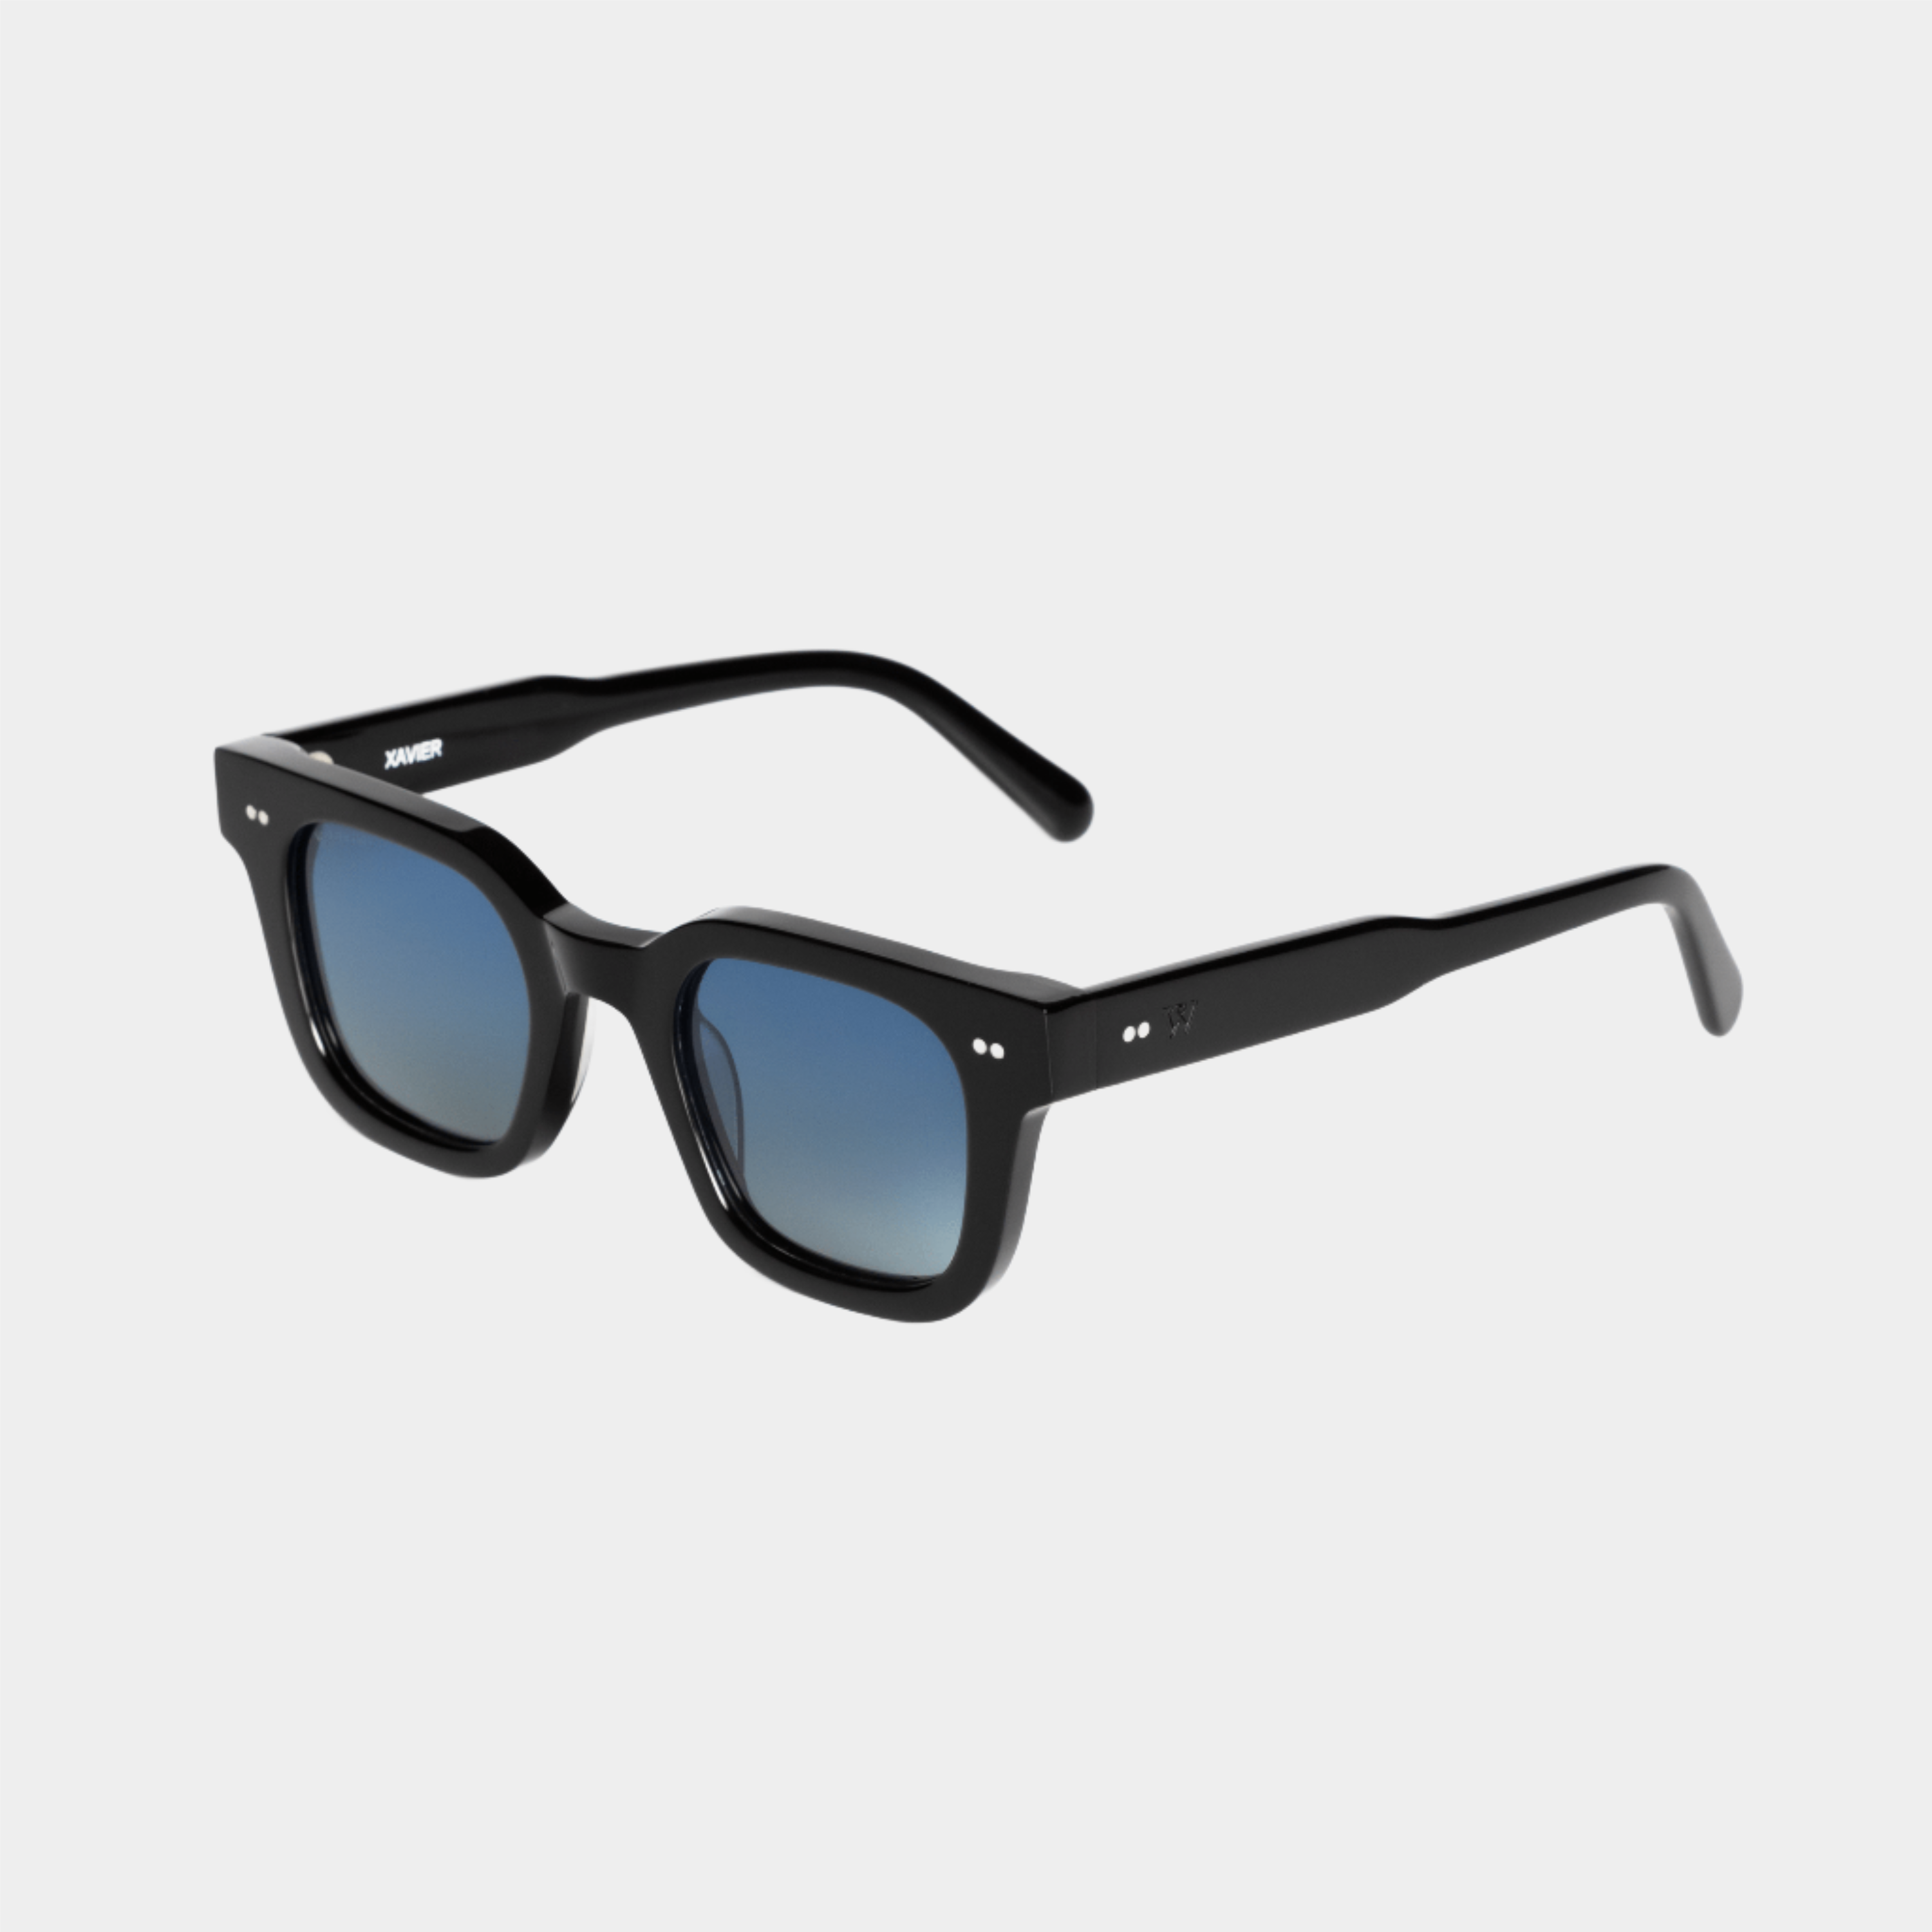 Walter Hill Sunglasses Black / Standard / Polarized Cat.3 XAVIER - Black - Sapphire